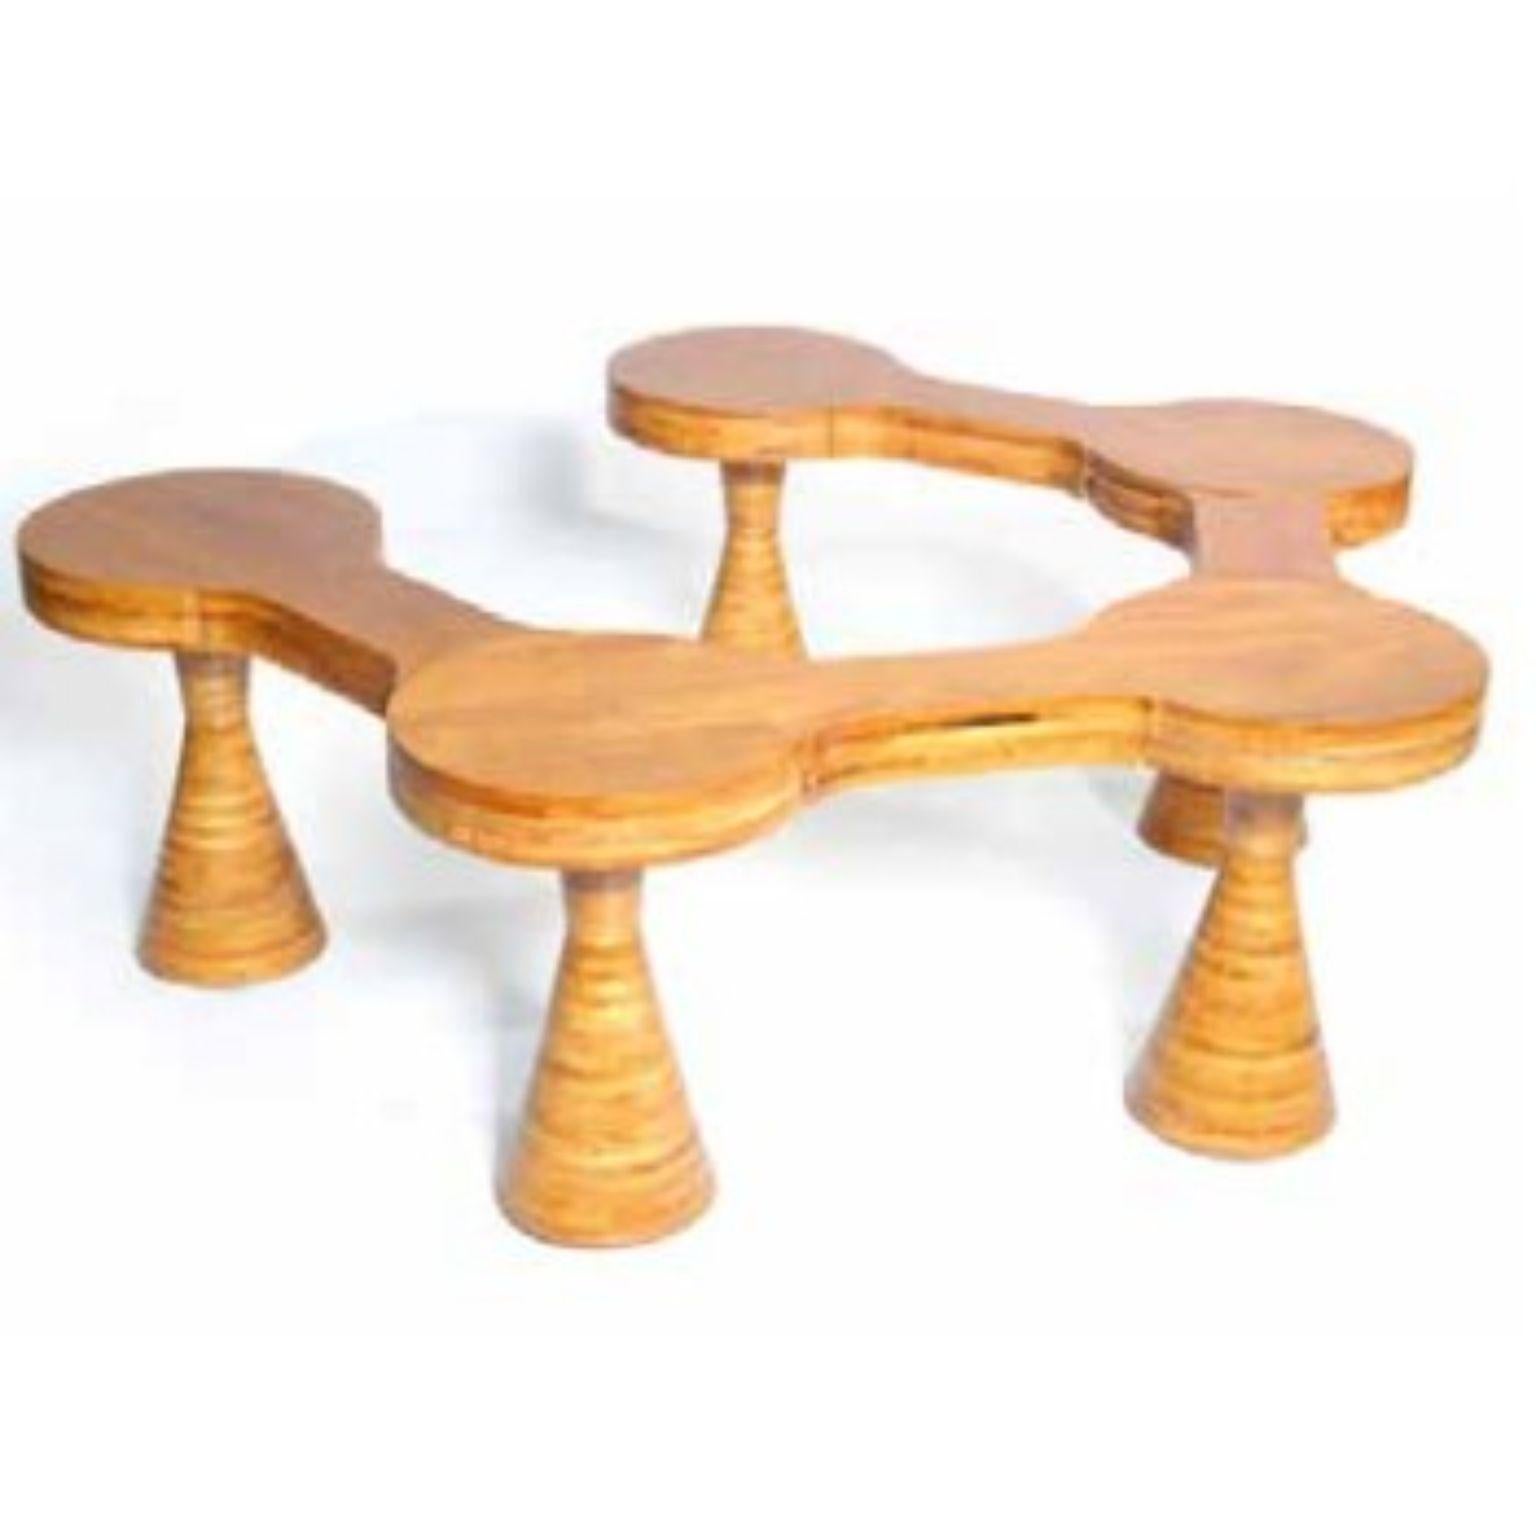 Ambuá 5p bench / coffee table by Mameluca
Material: Vinhático wood
Dimensions: D 180x W 86 x H 47 cm

Ambuá means 